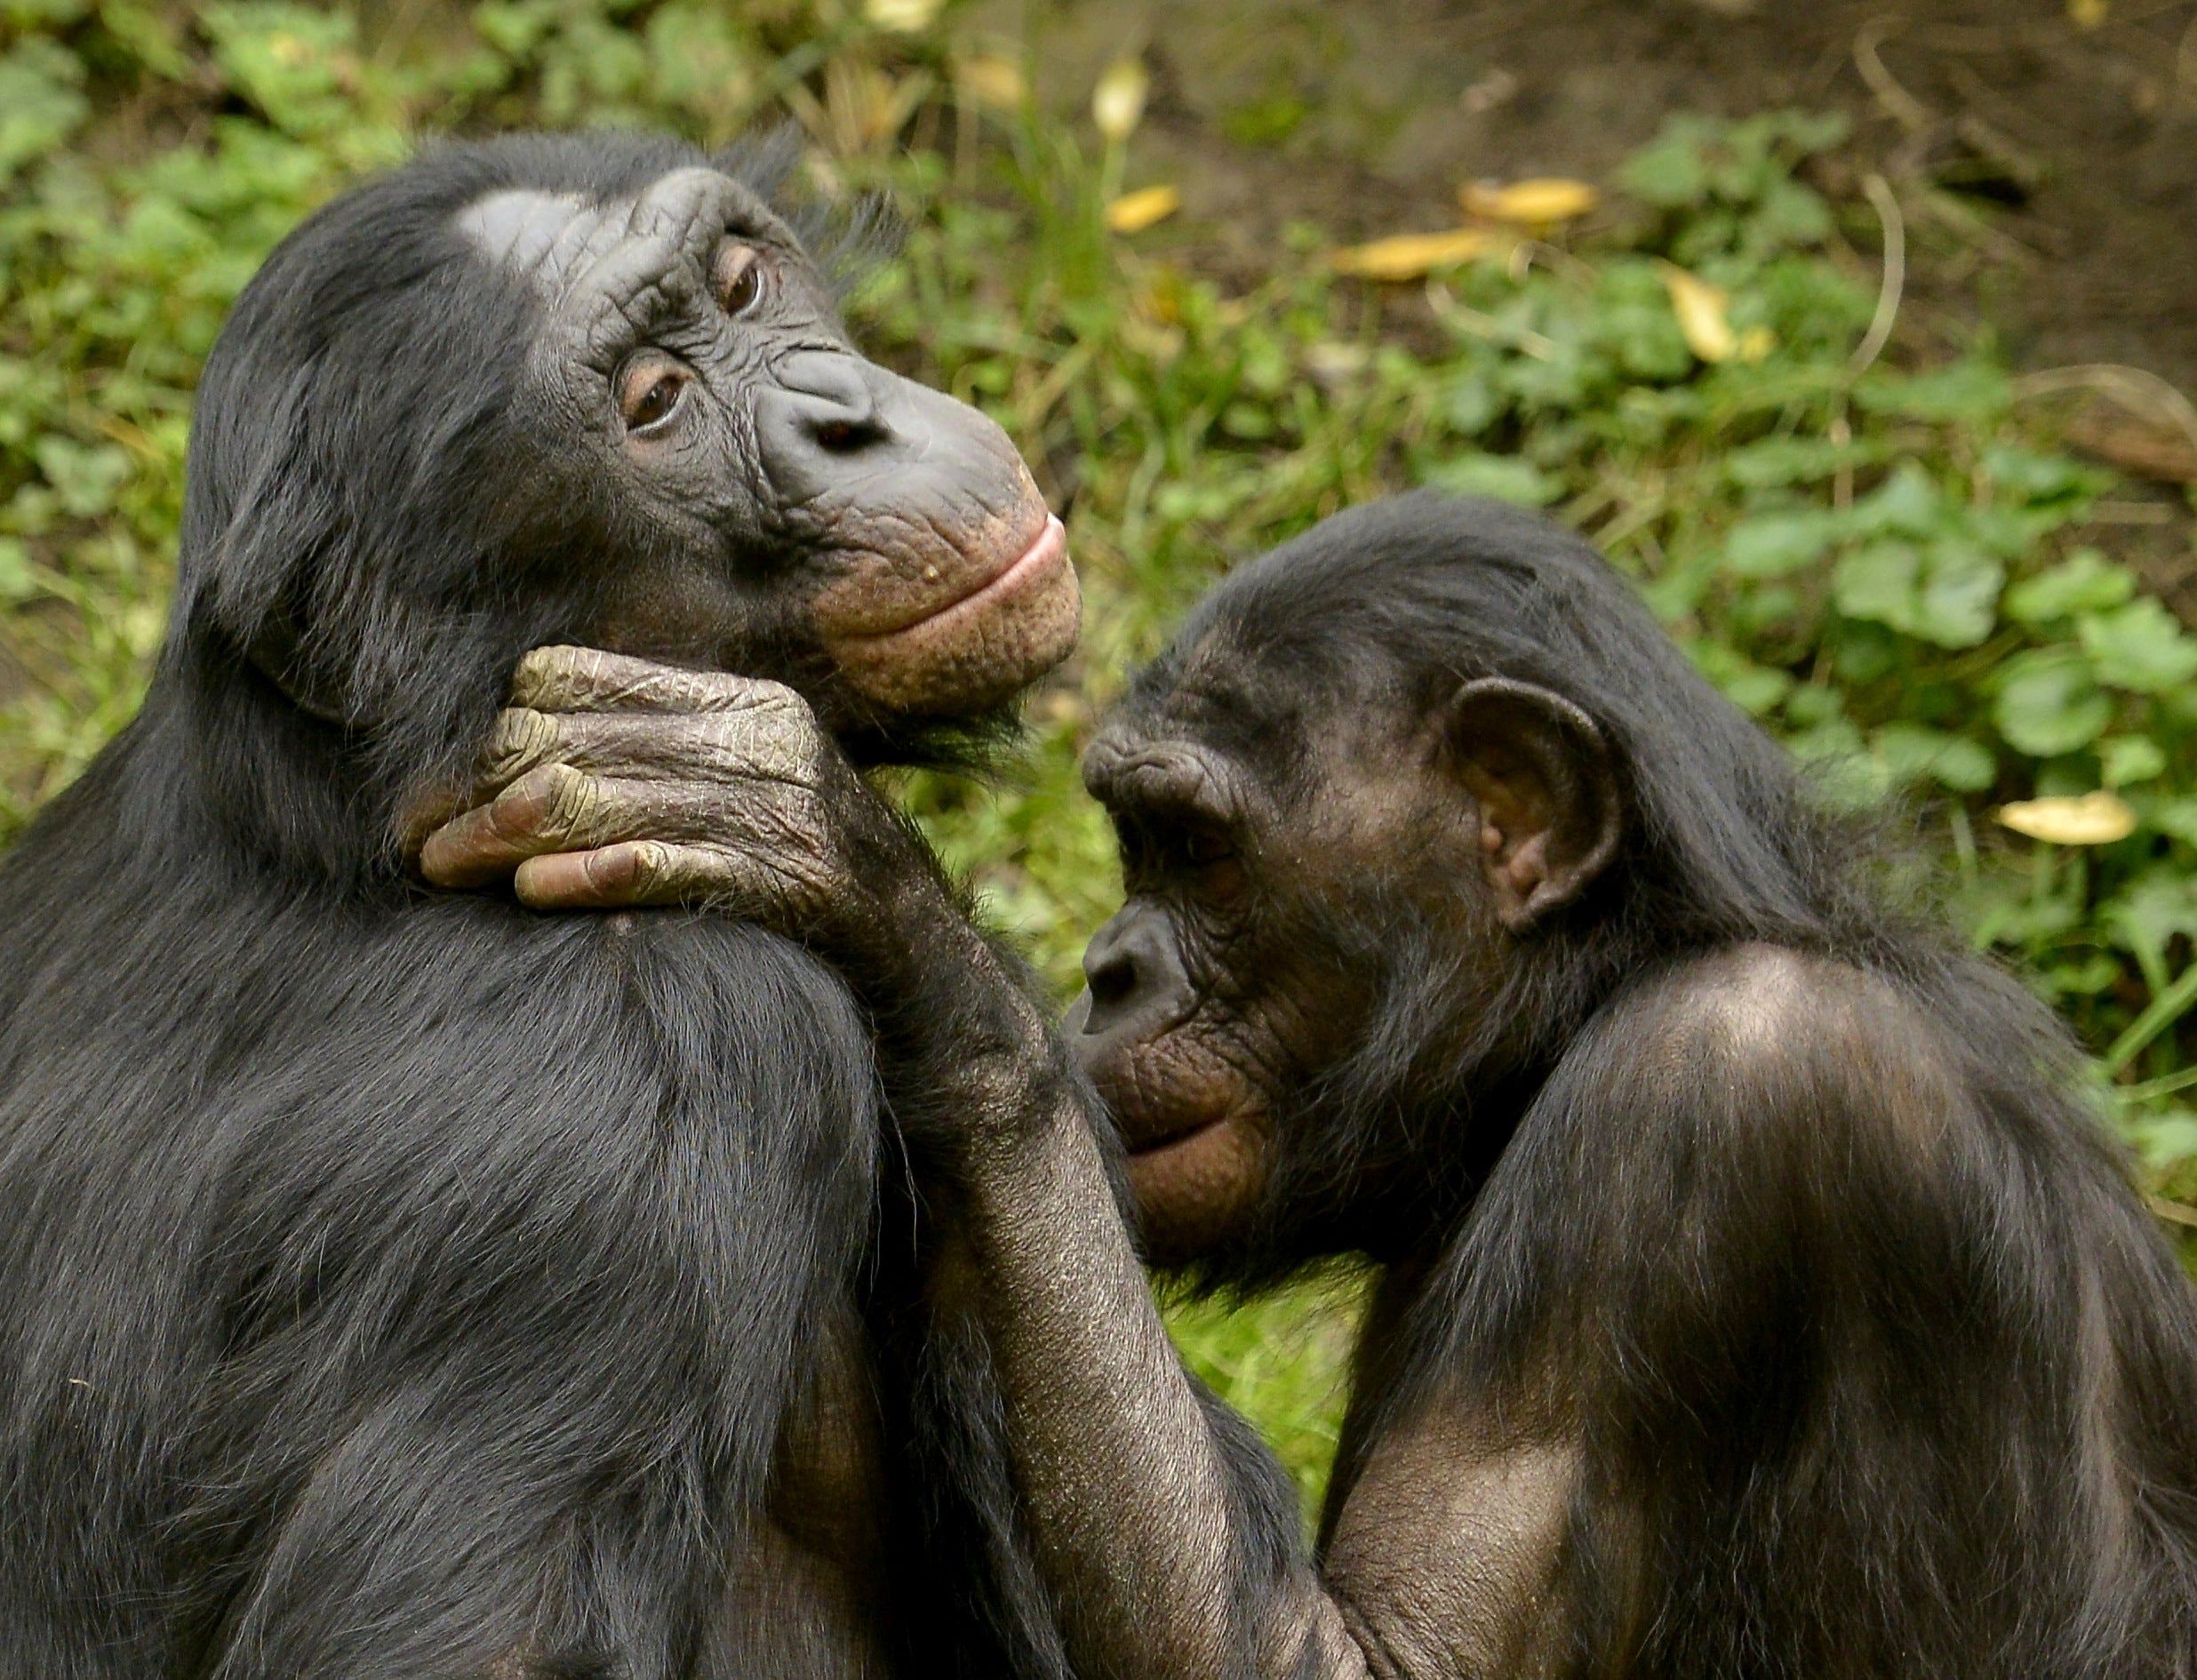 human vs chimpanzee hand